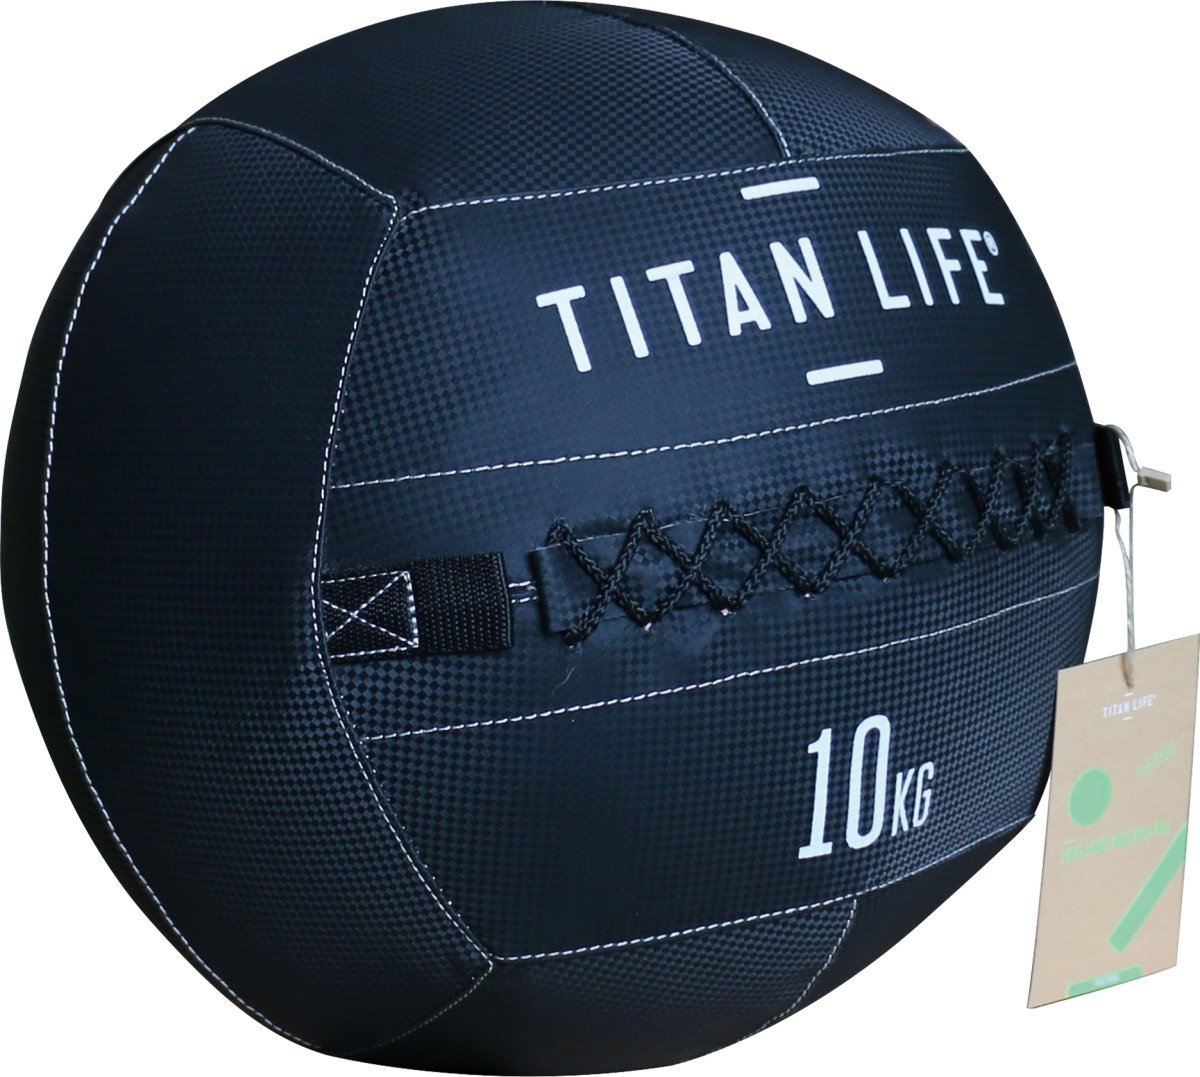 Titan Life Large Rage Wall Ball 10 kg